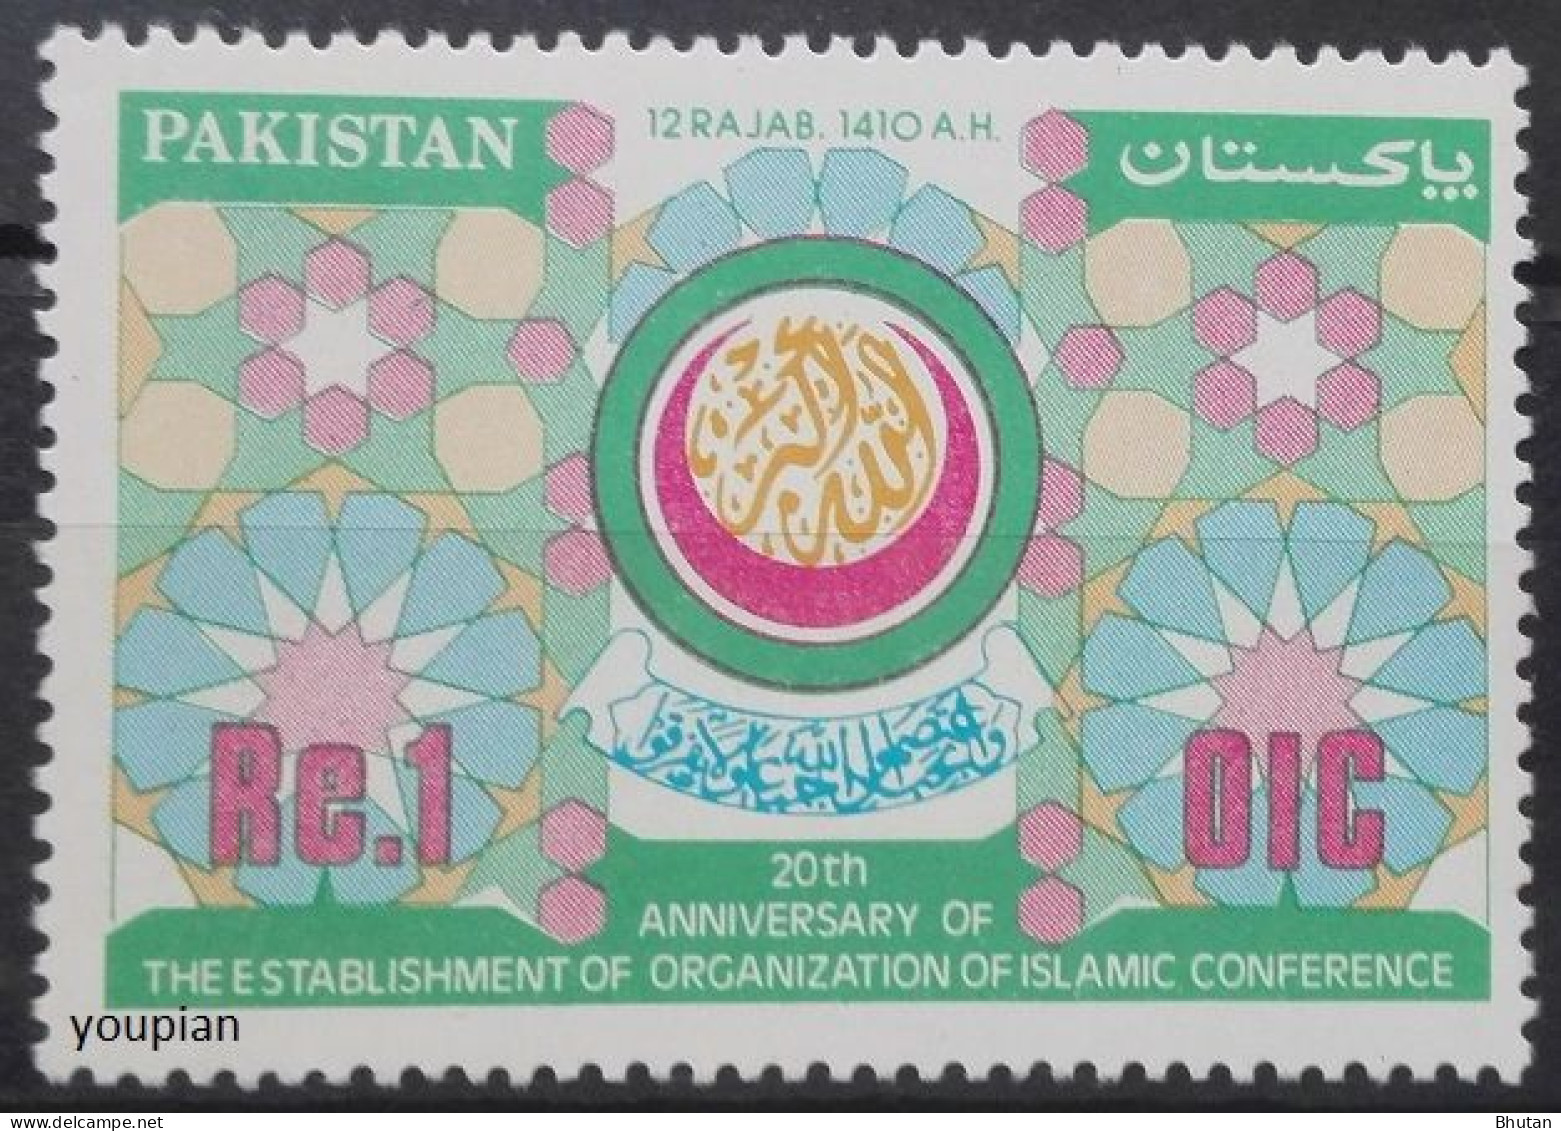 Pakistan 1990, The Establishment Of Organization Of Islamic Conference, MNH Single Stamp - Pakistan